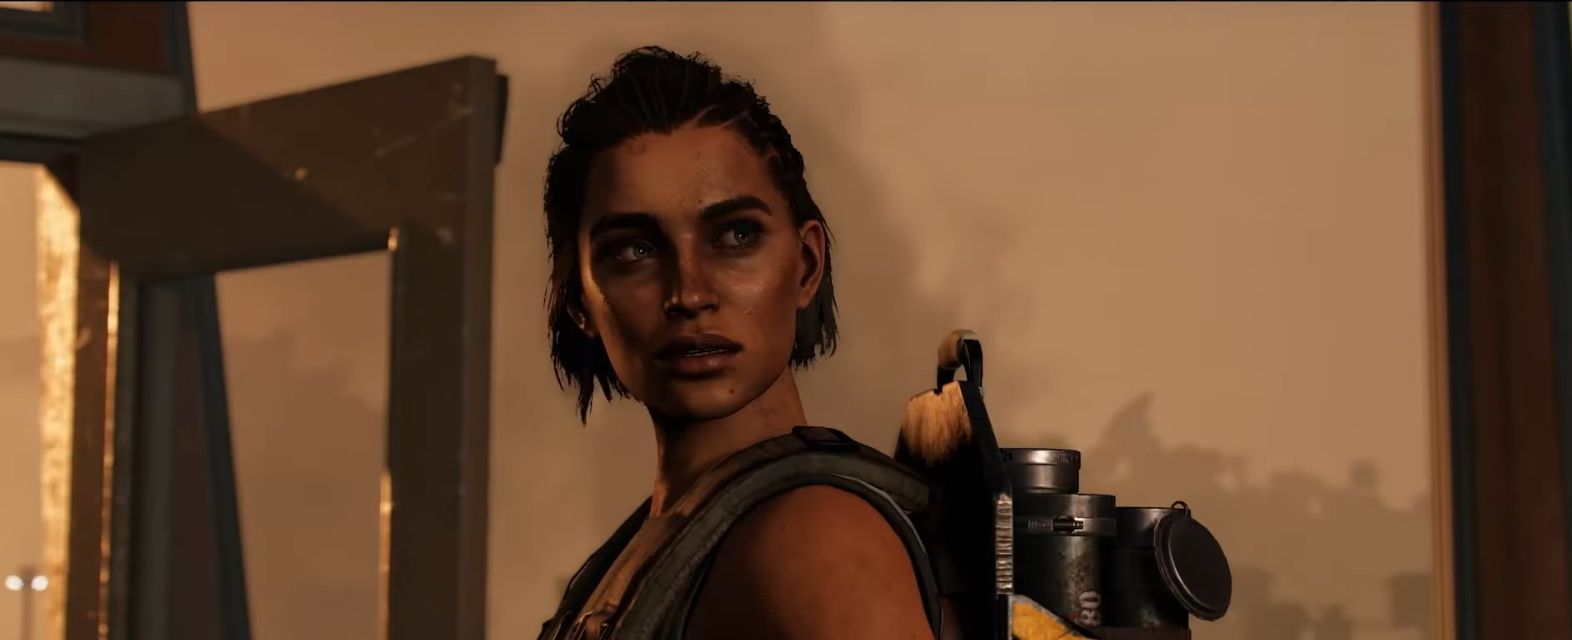 far-cry-6-gameplay-screenshots-dani-female